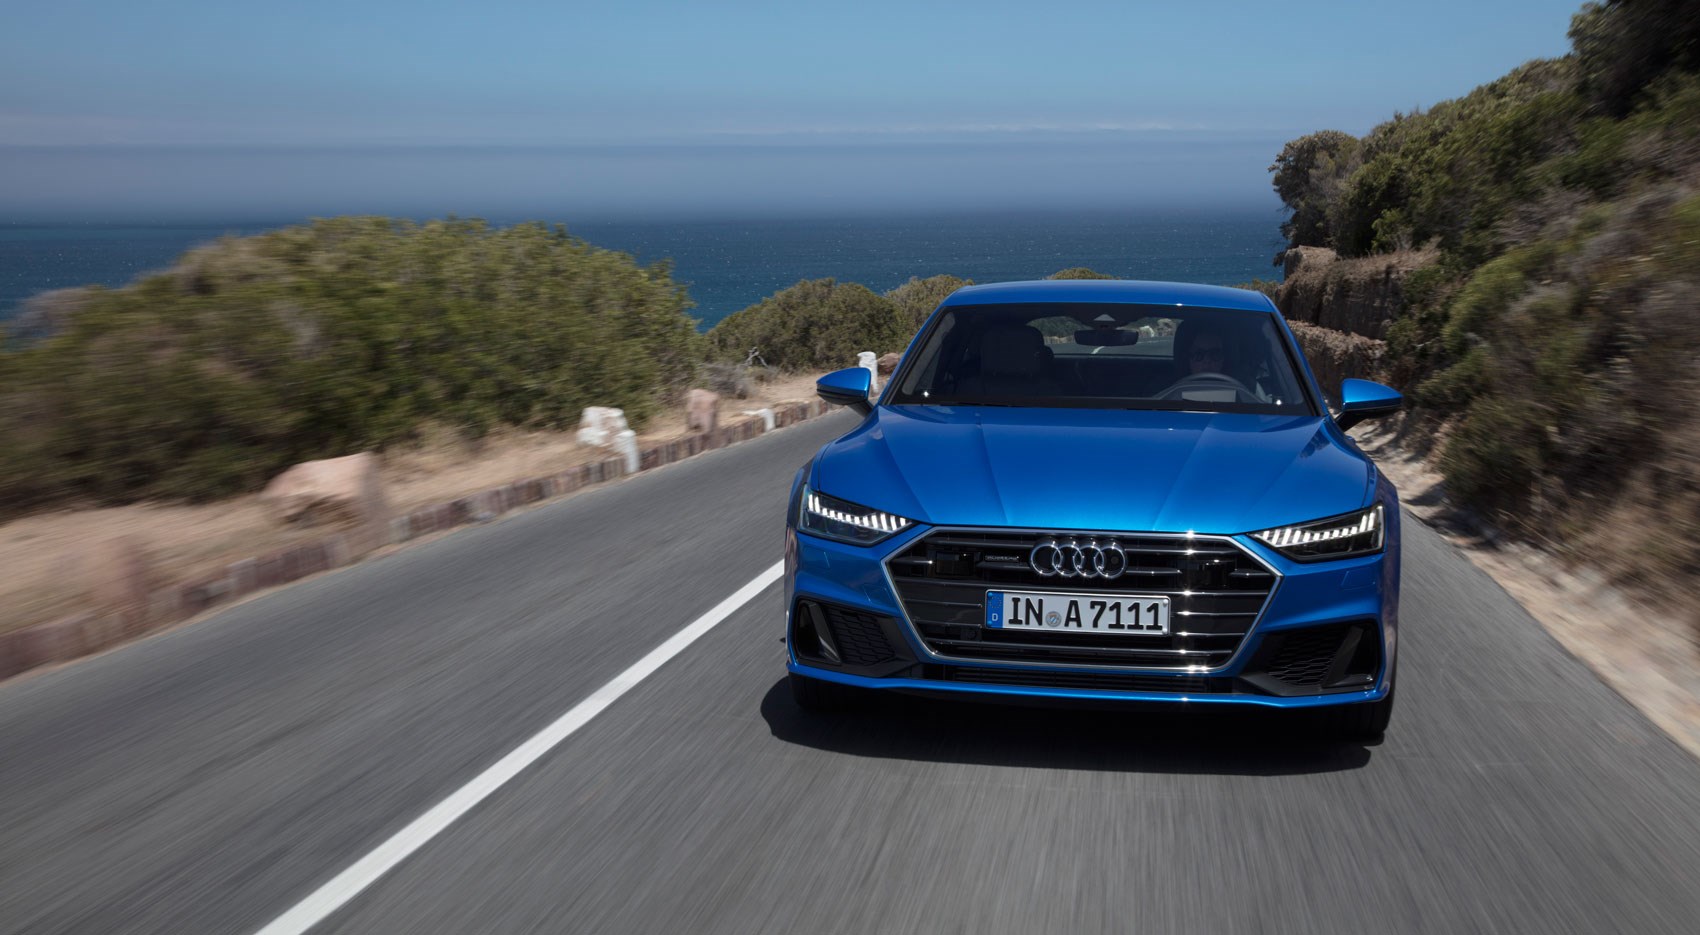 New Audi A7 (2018) review: the sleek exec driven